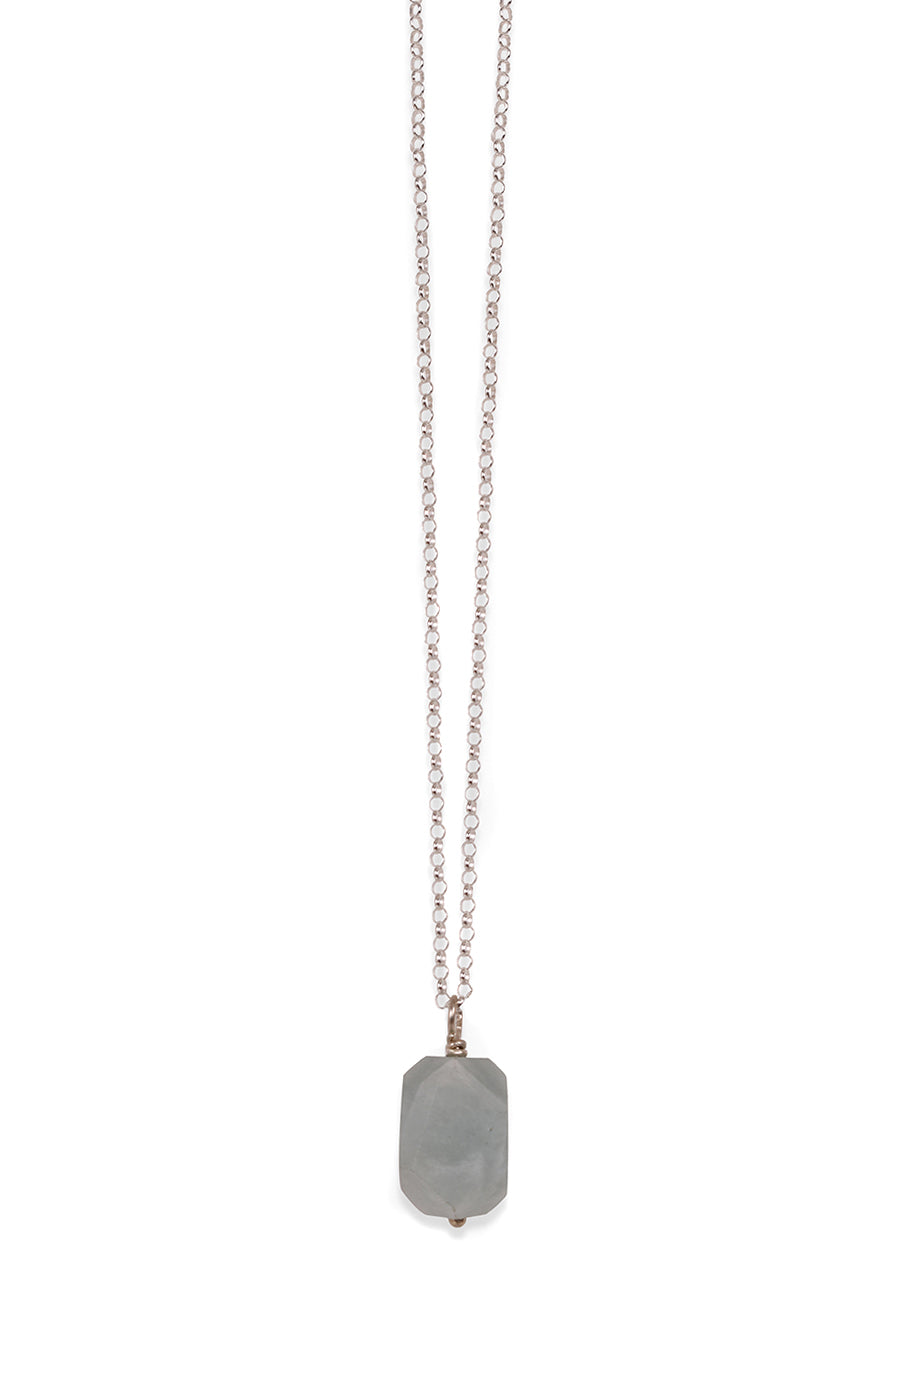 Alouette Design
 Belche Necklace - Silver